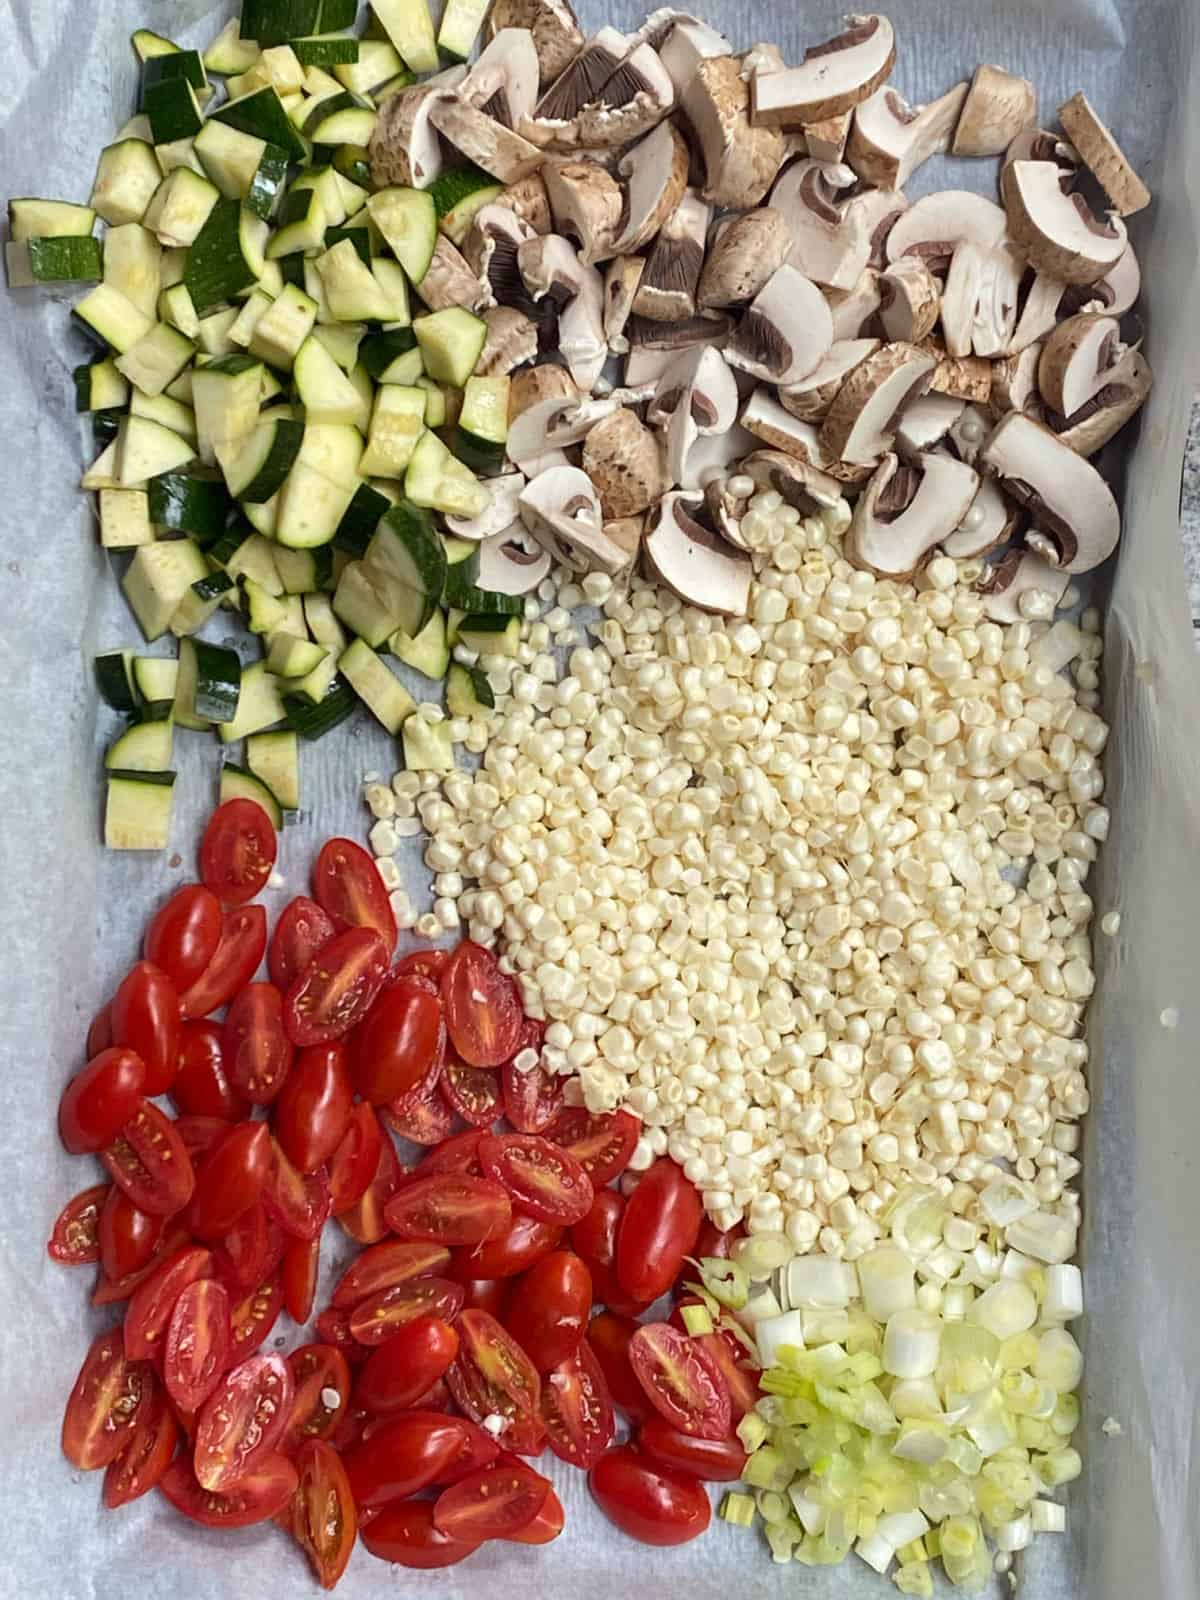 Ingredients for quinoa salad